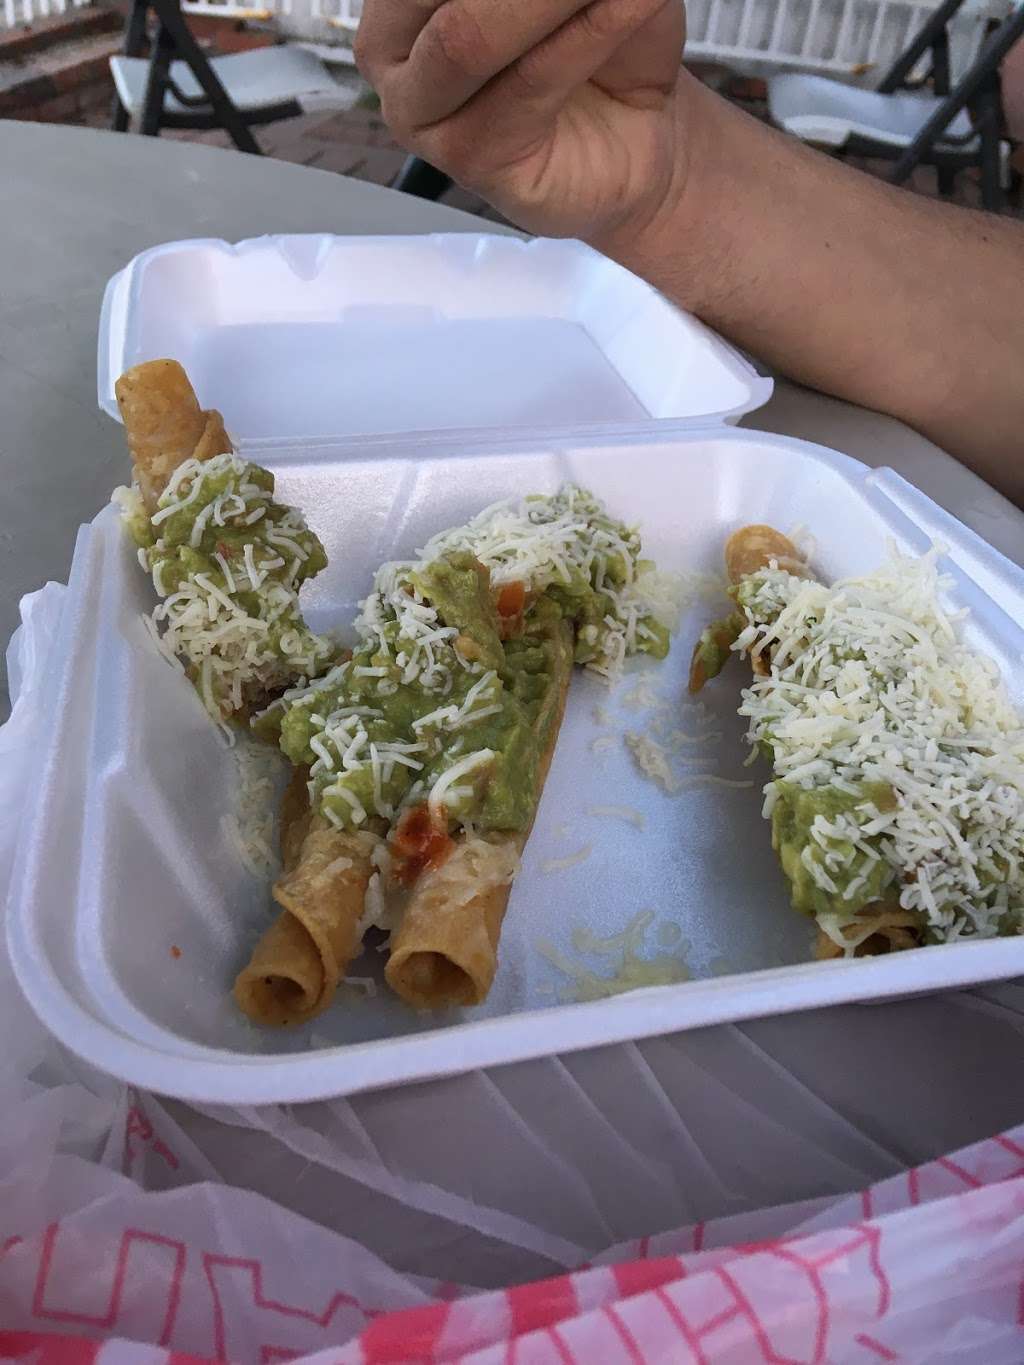 Saras Mexican Food | 2907 Mission Blvd, San Diego, CA 92109, USA | Phone: (858) 488-4436